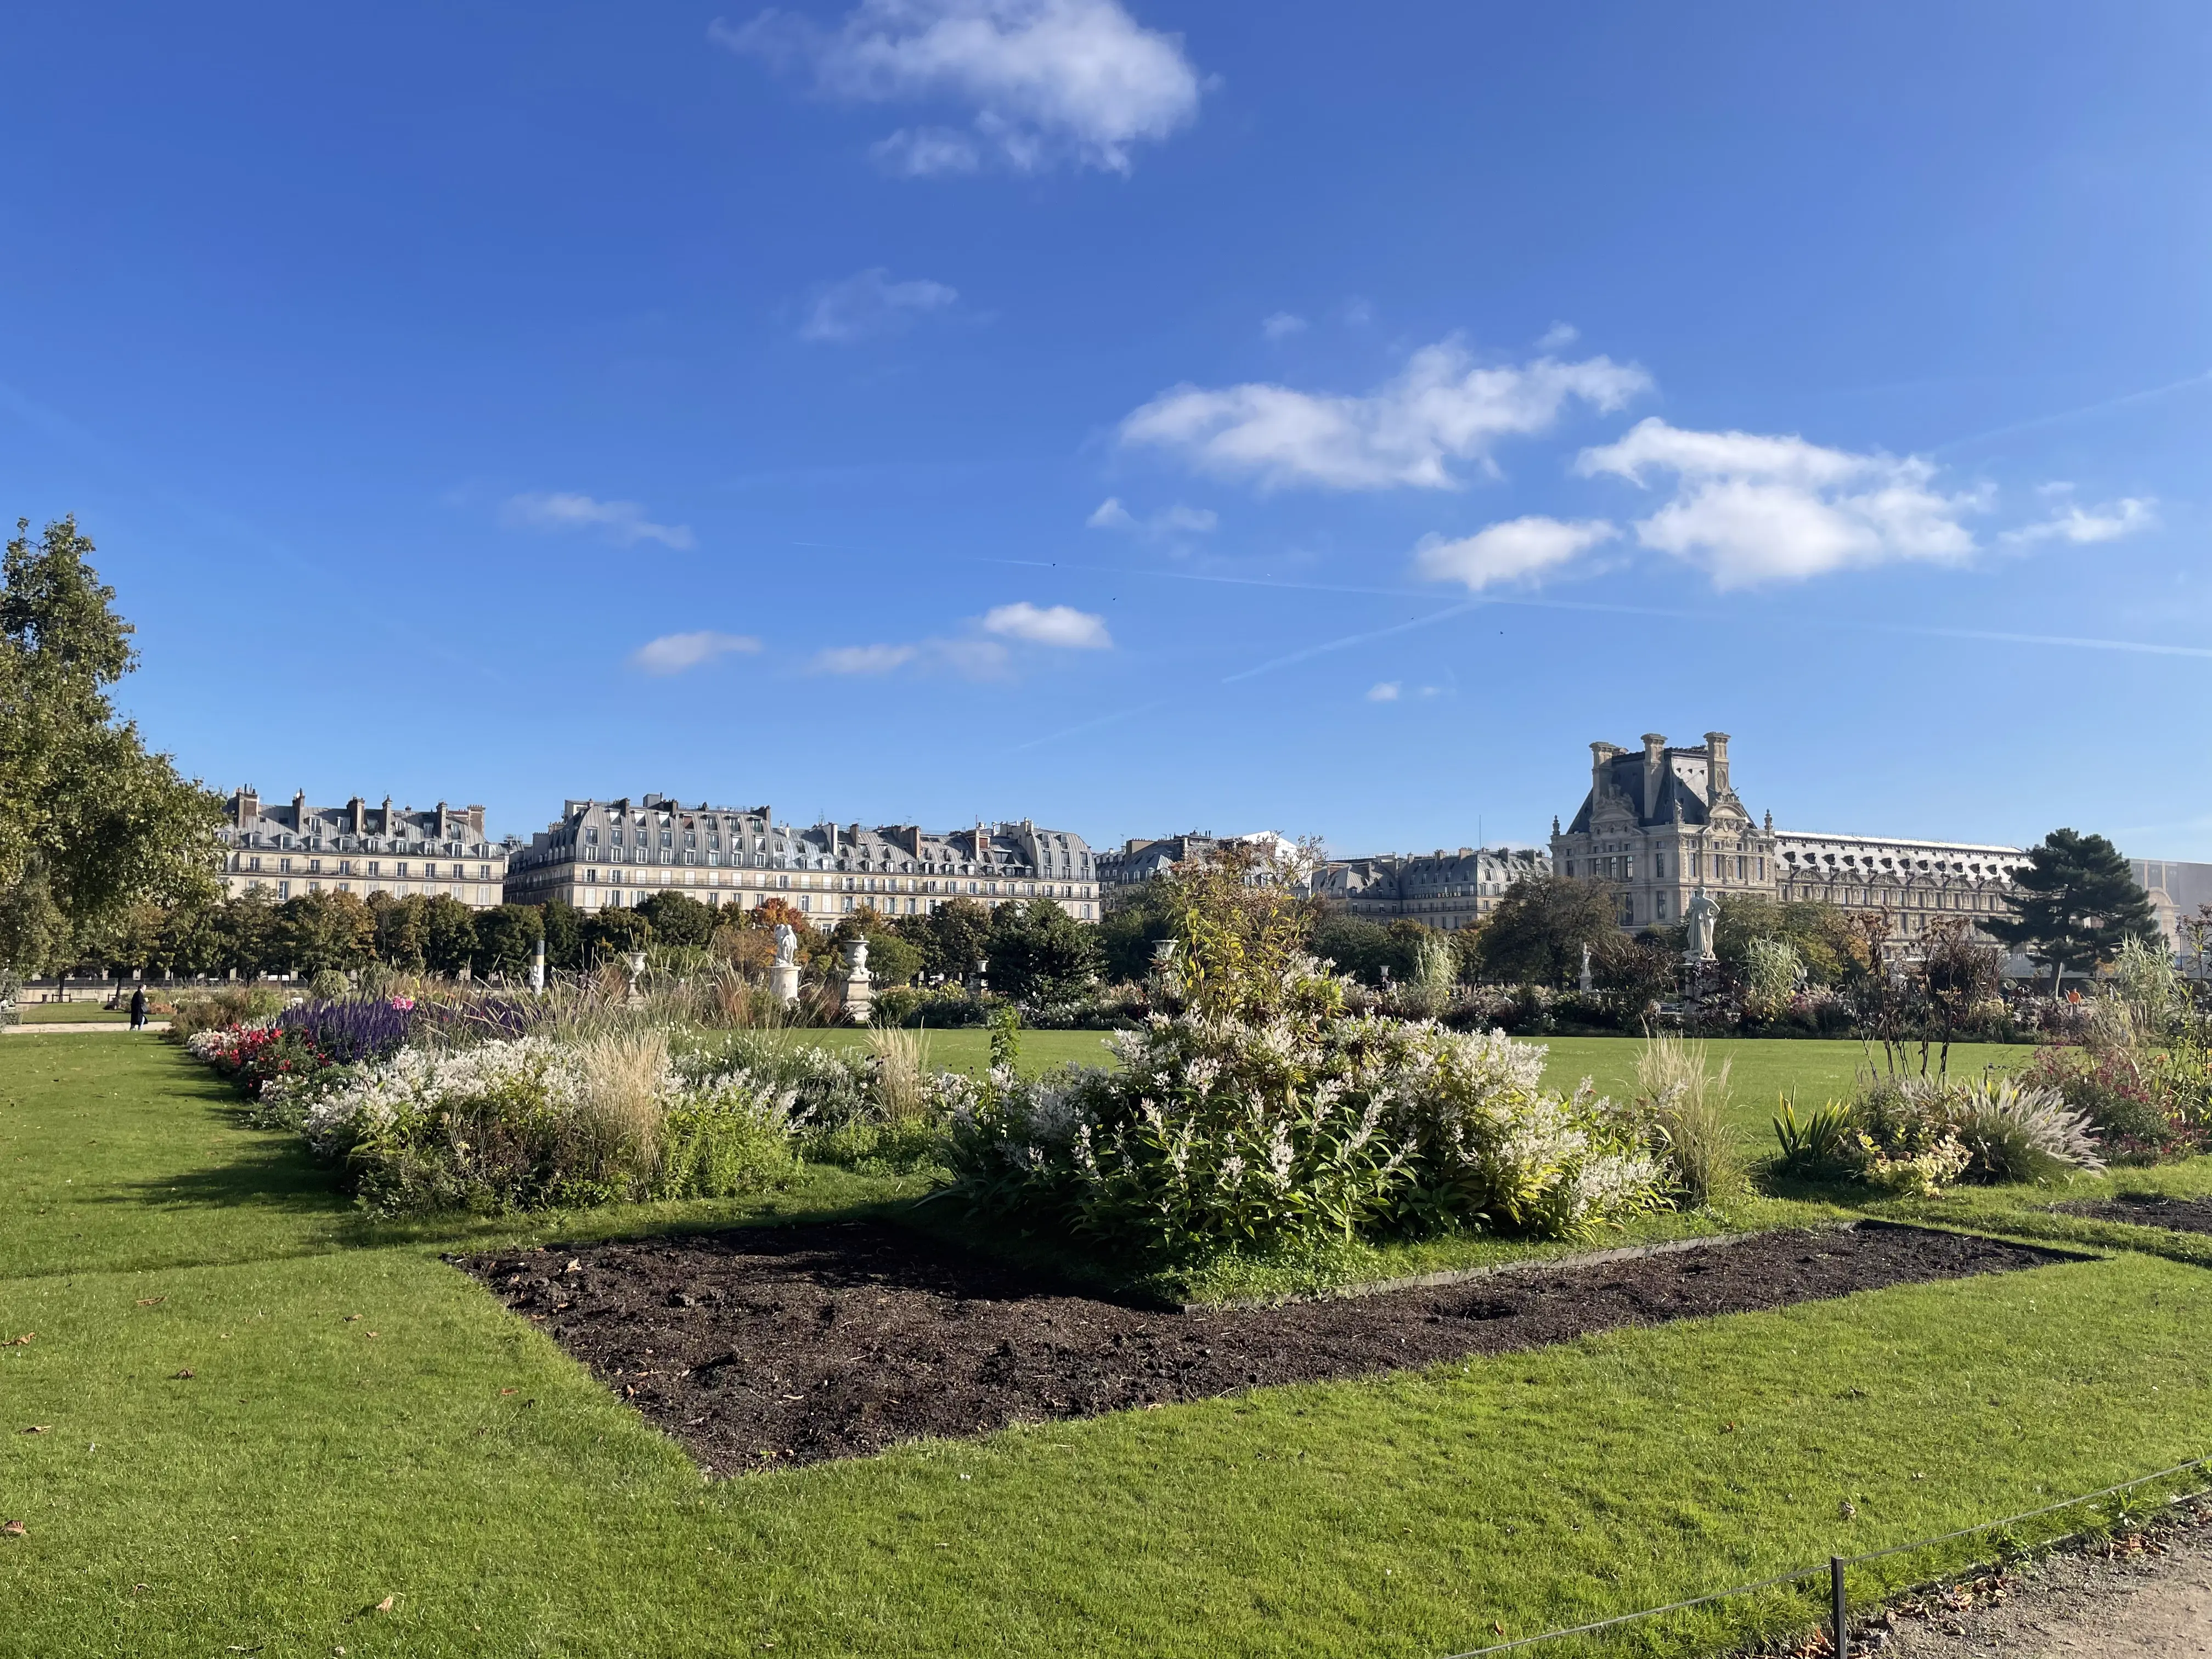 The Louvre across the garden